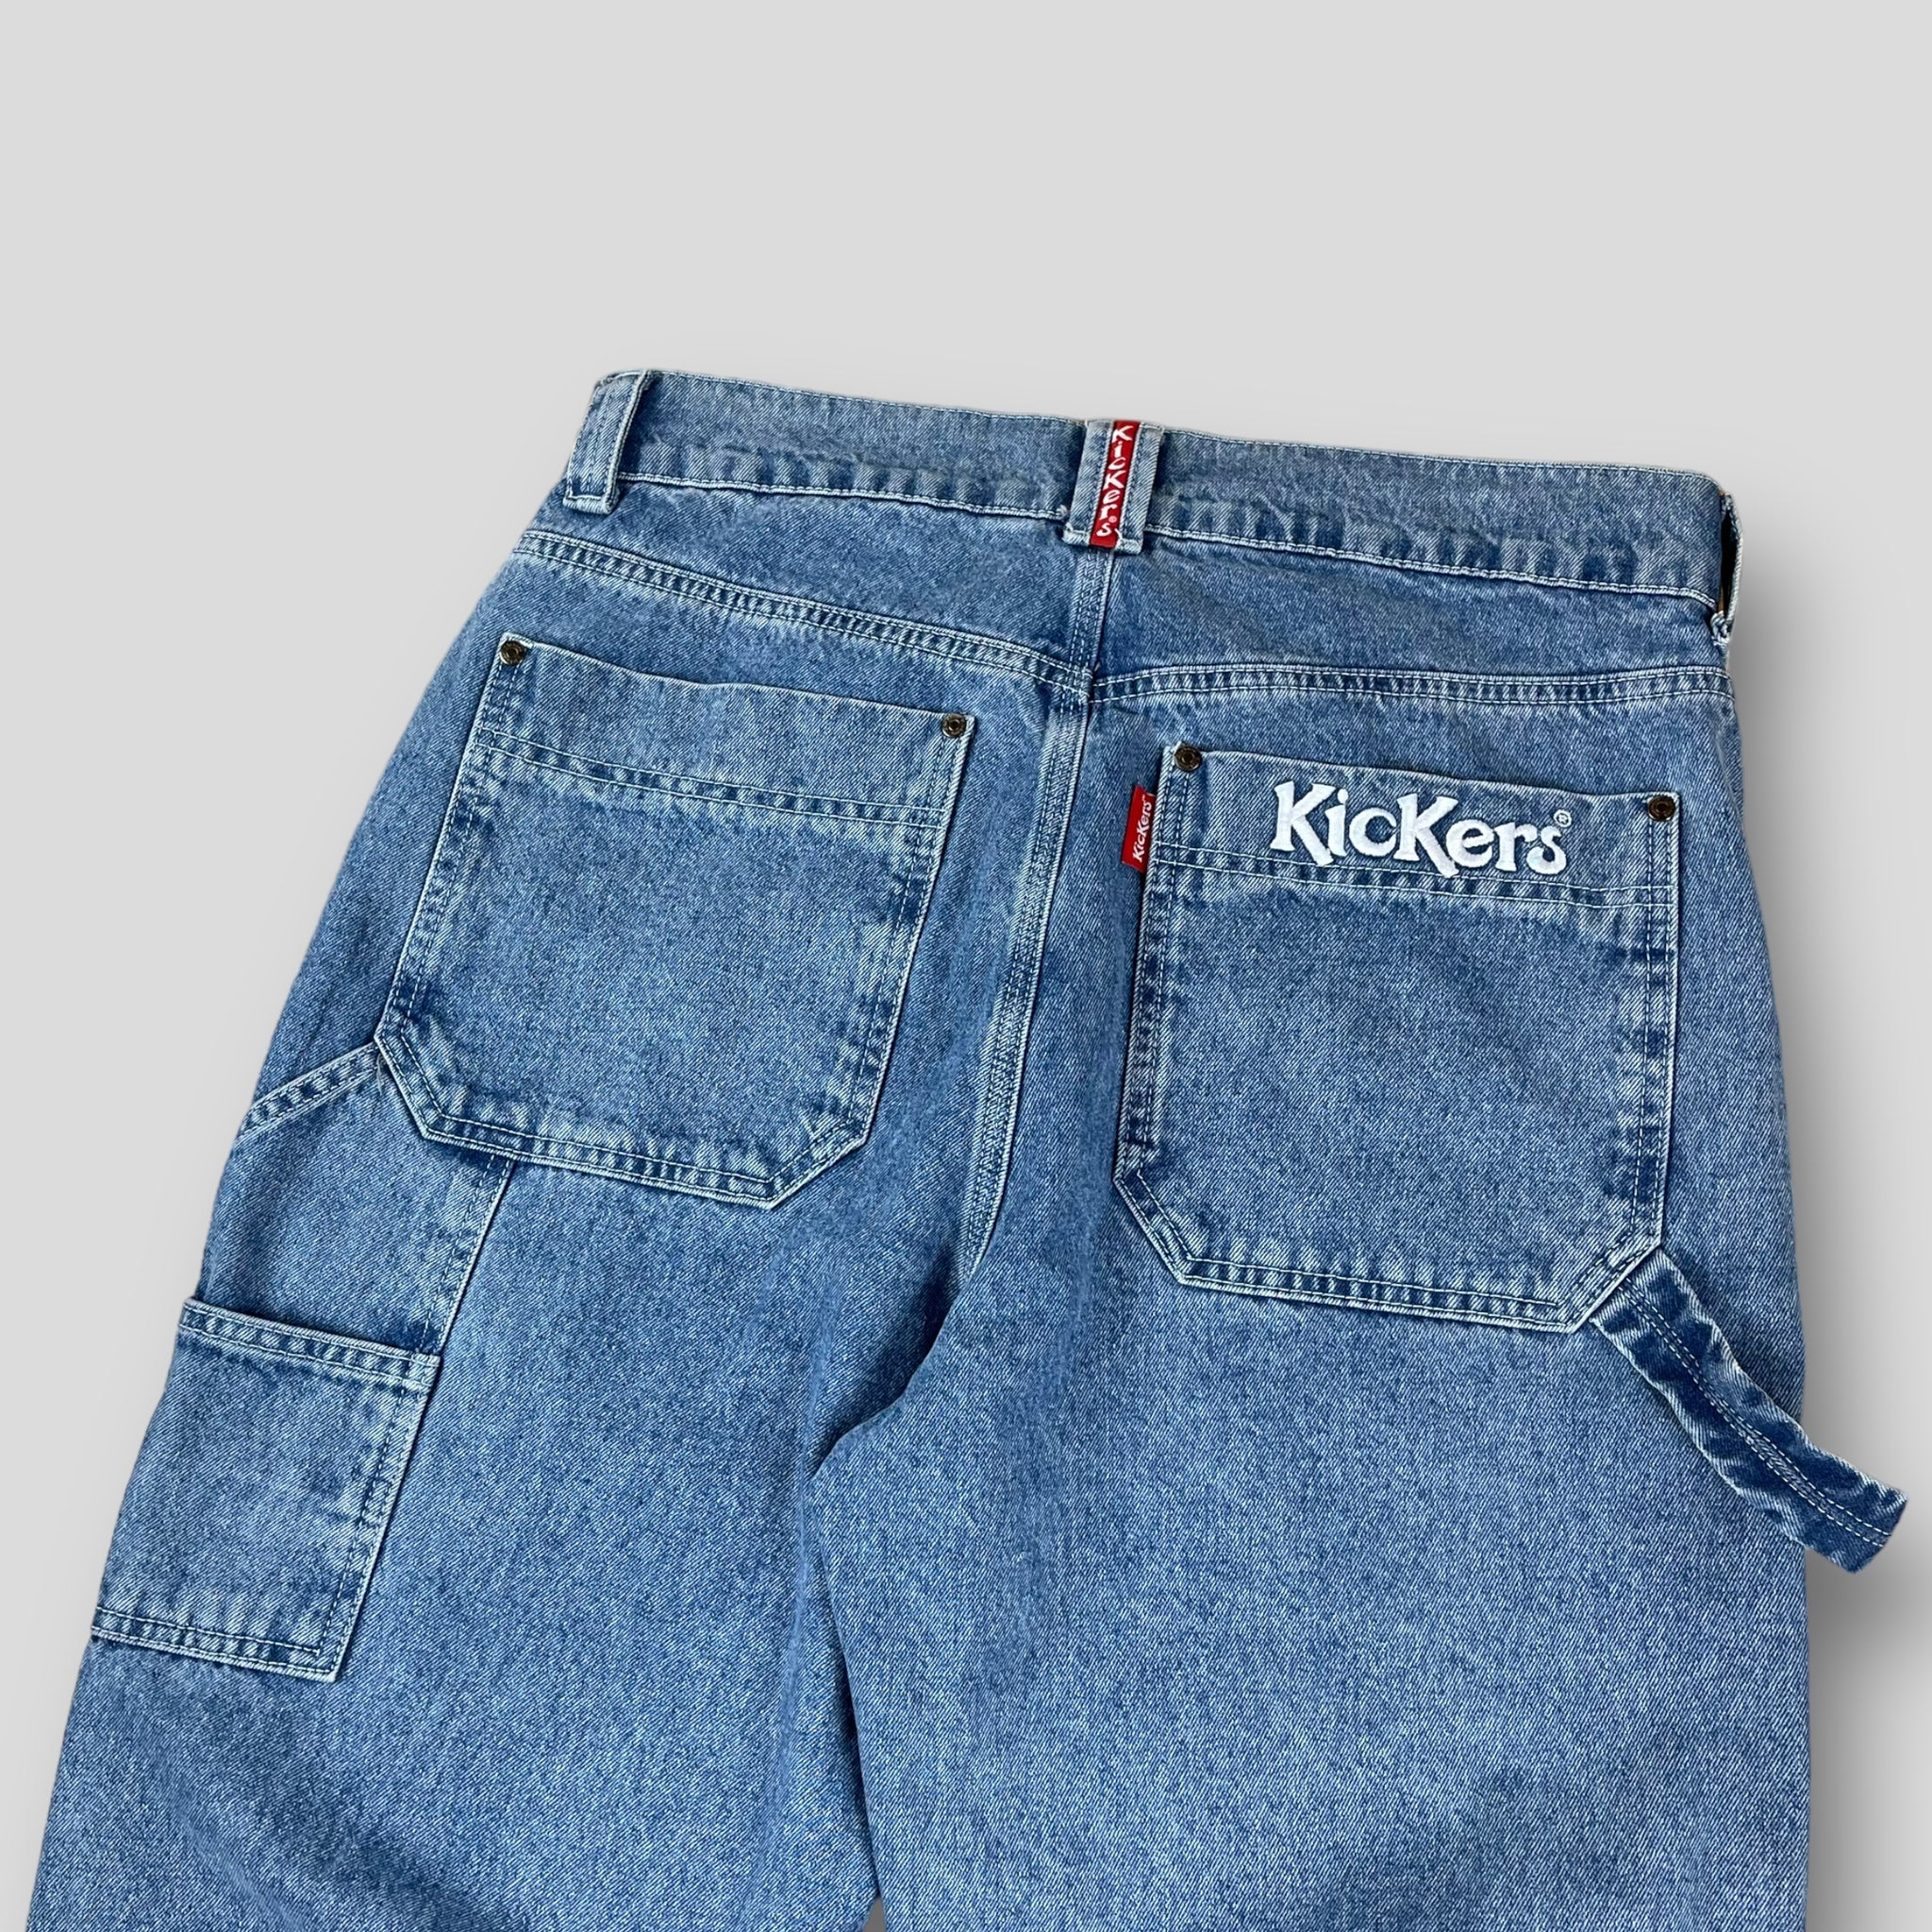 Kickers Jeans